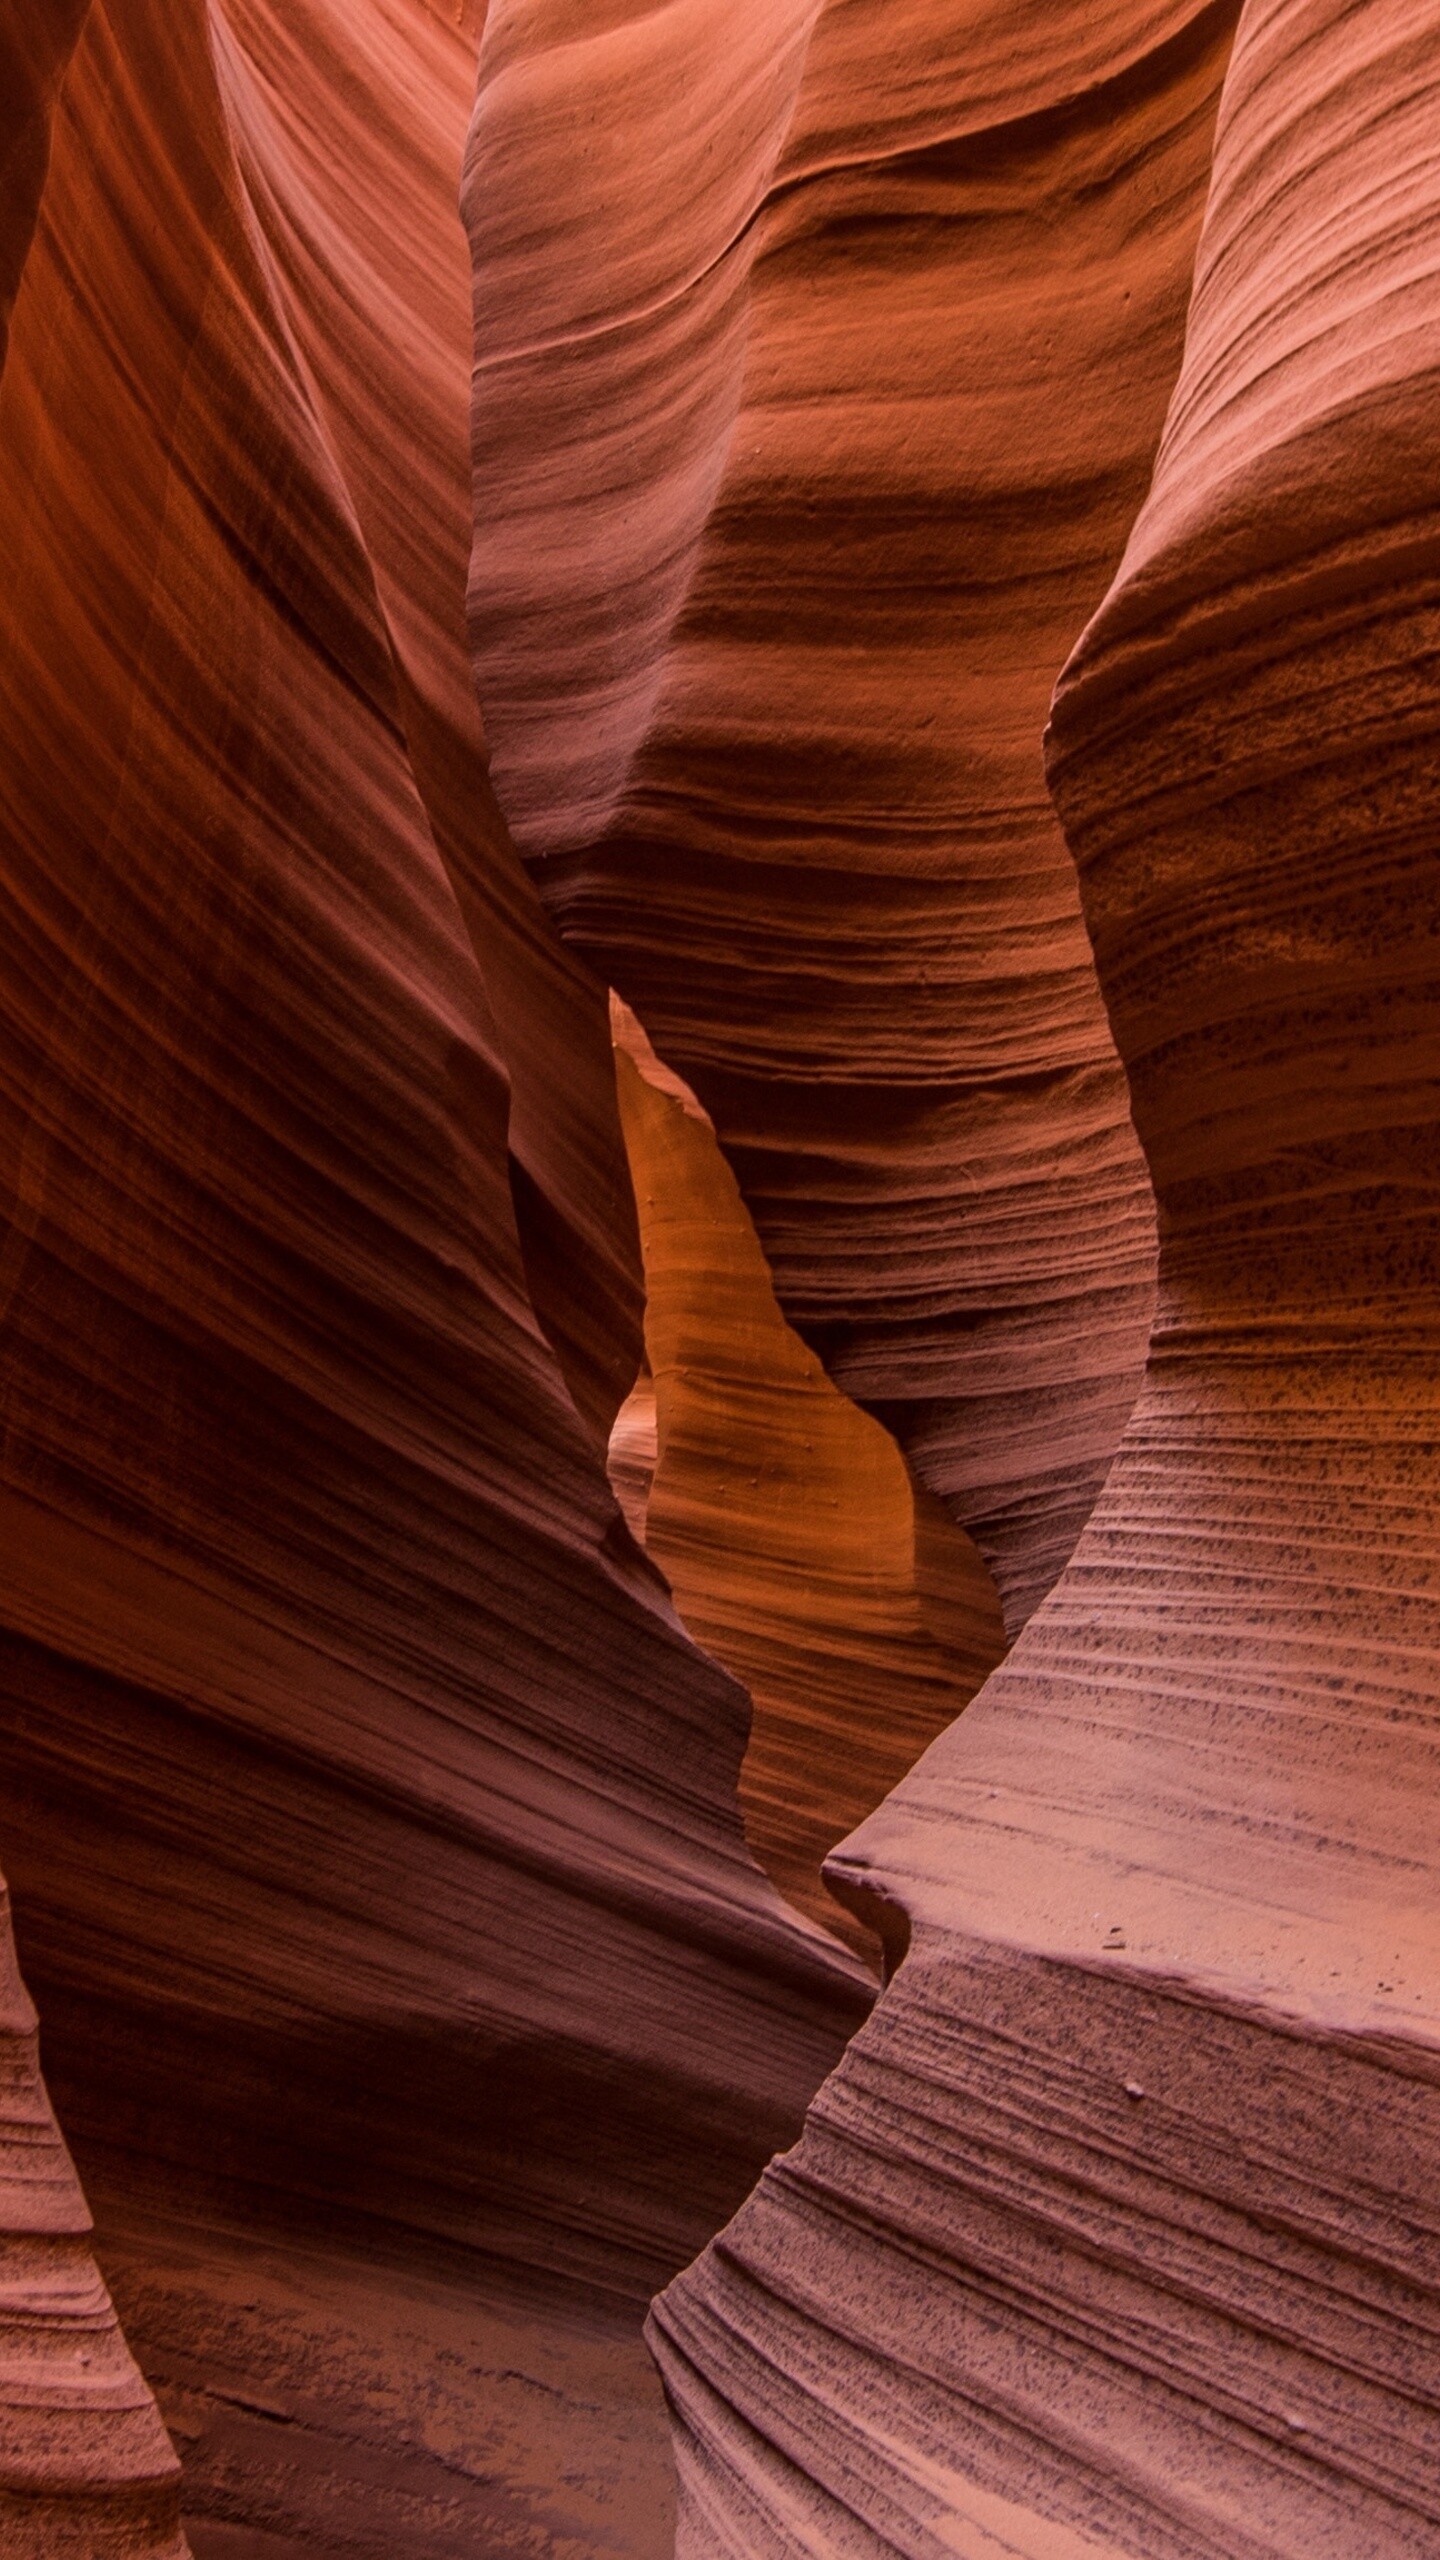 Geology: Canyon, A deep cleft between escarpments or cliffs, A rock formation. 1440x2560 HD Wallpaper.